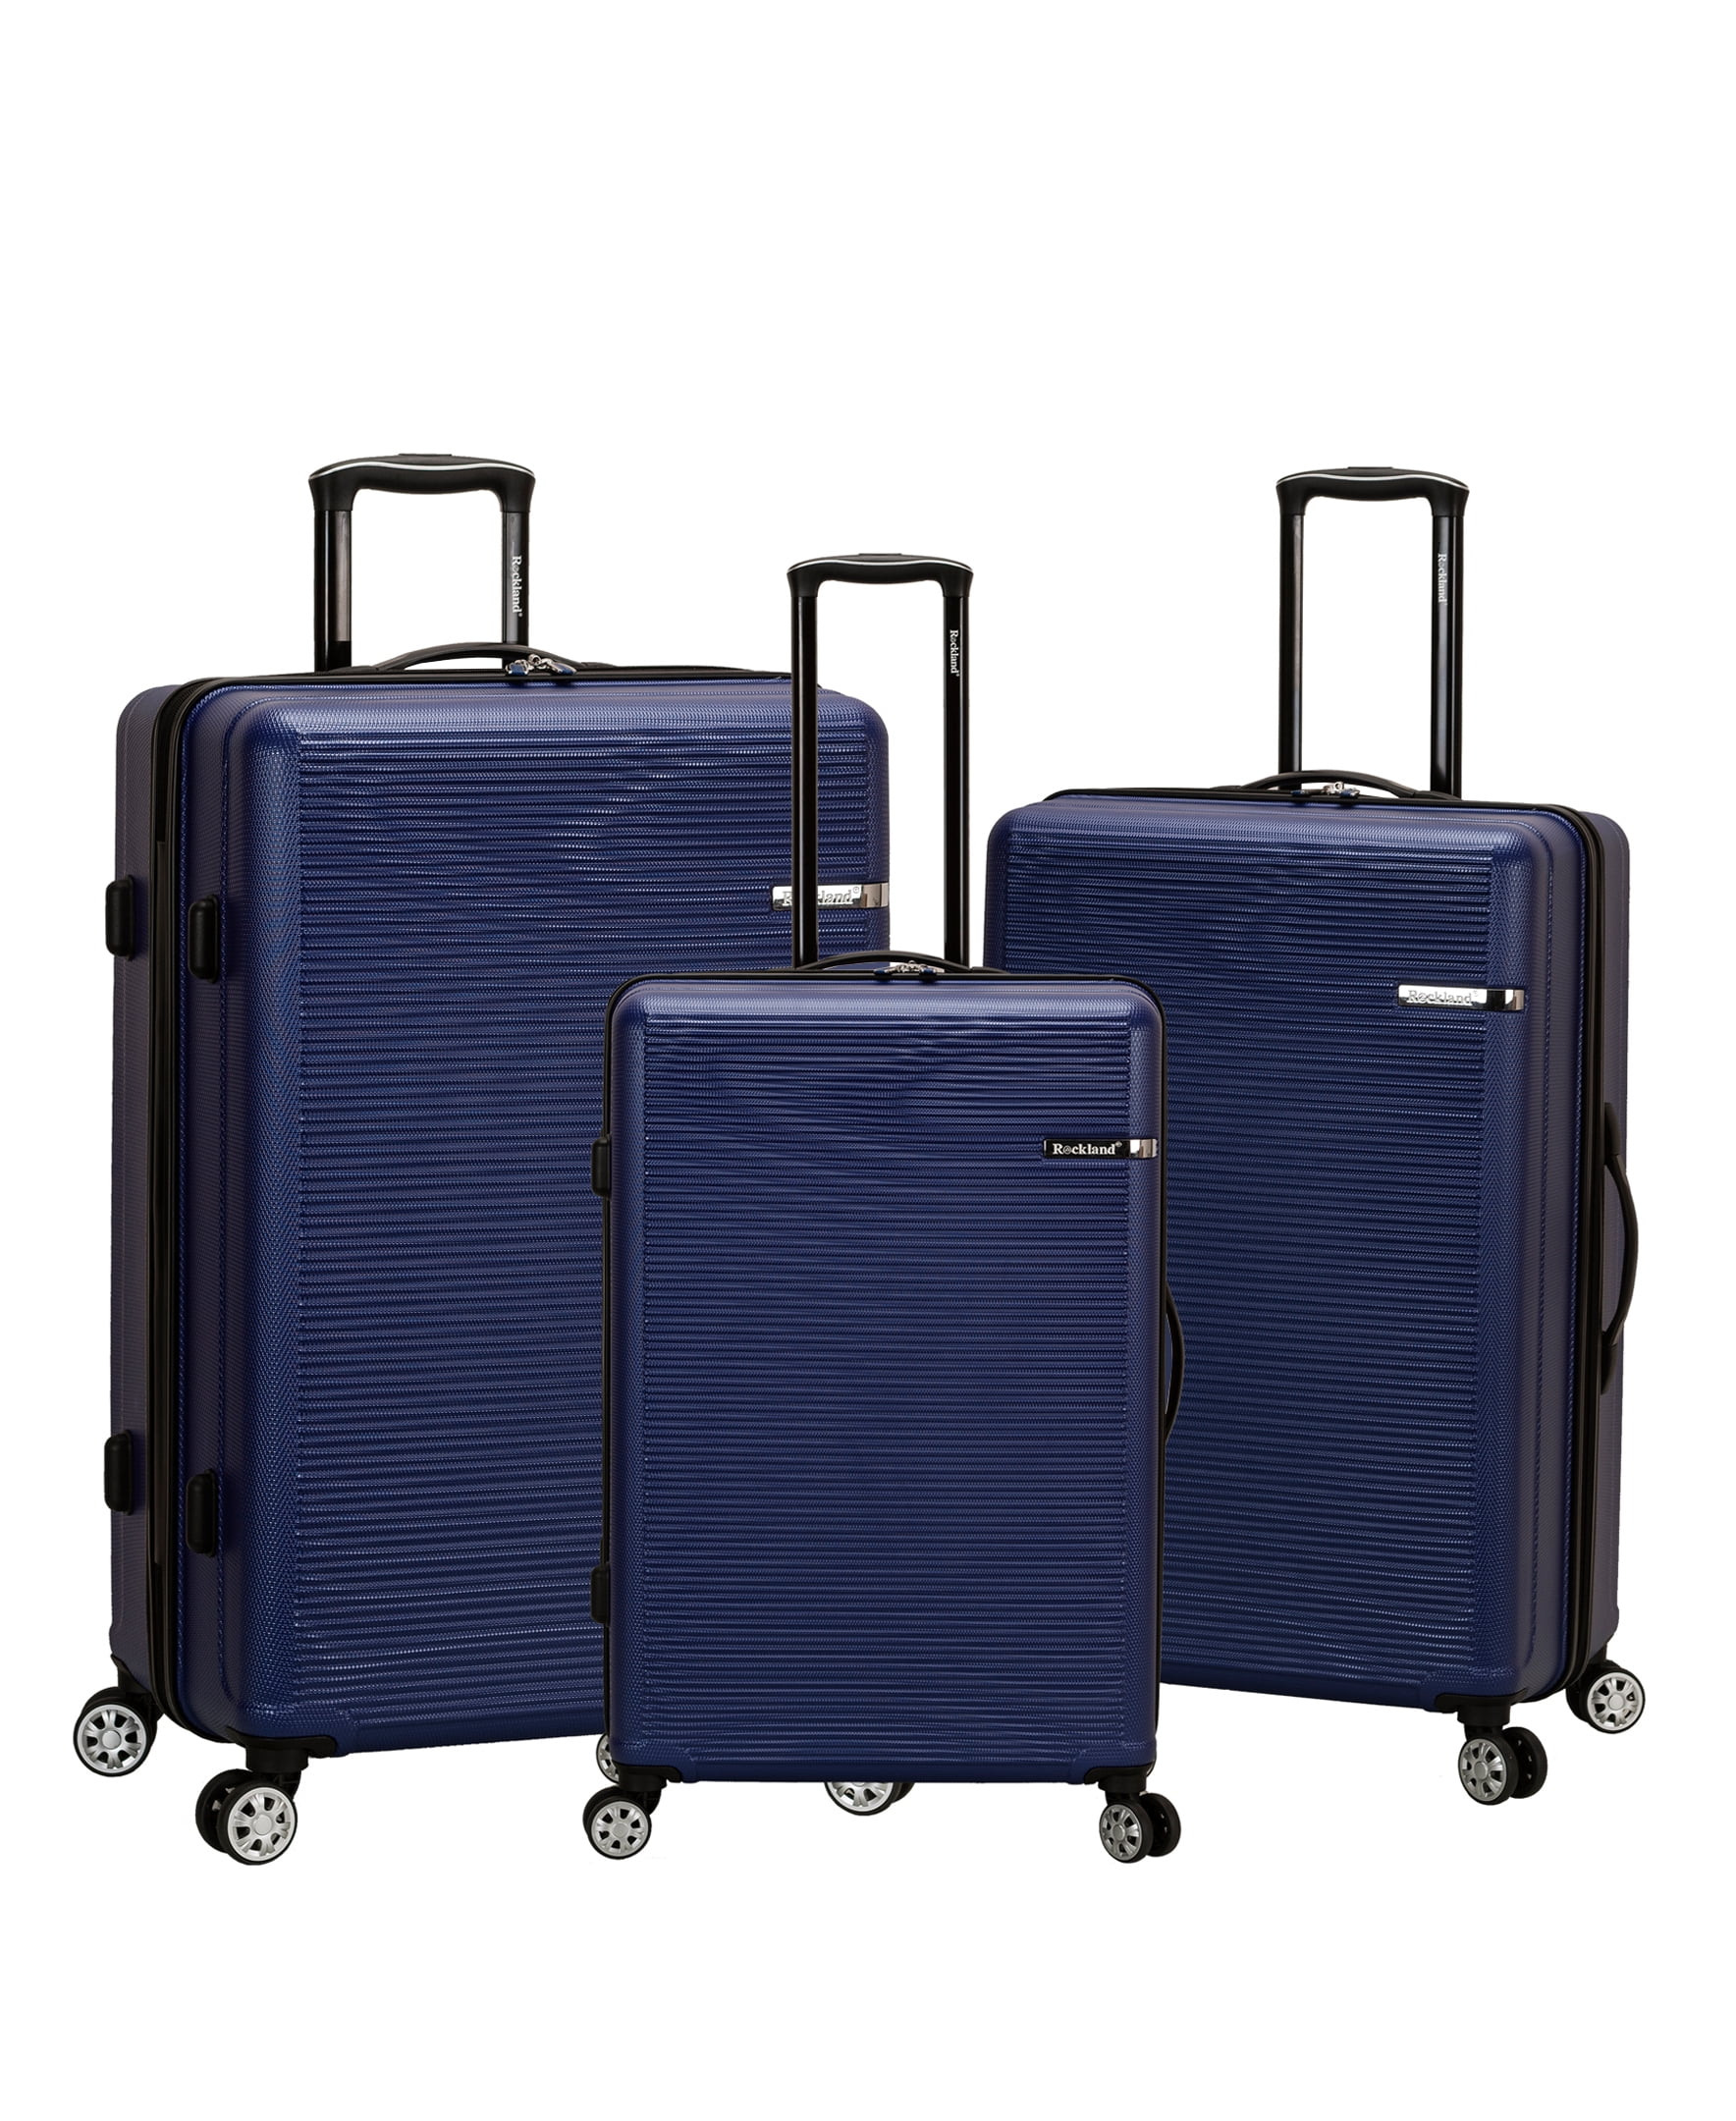 Rockland Luggage Skyline 3 Piece Hardside ABS Non-Expandable Luggage ...